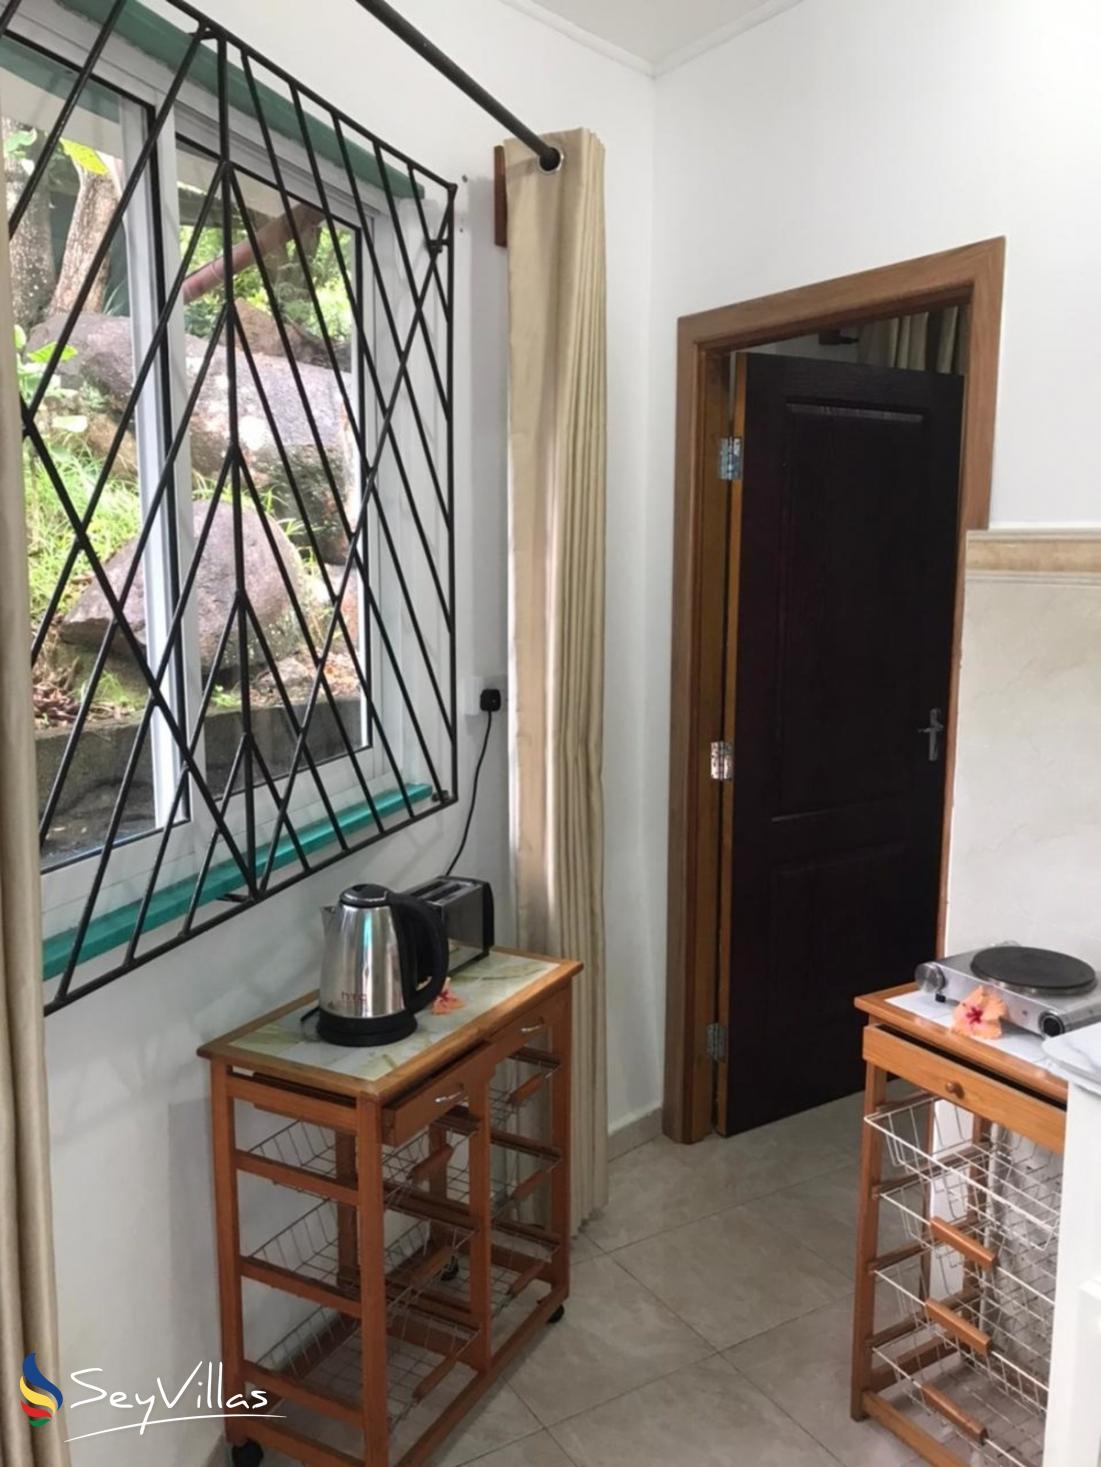 Photo 82: Acquario Villa - 1-Bedroom Studio Apartment - Praslin (Seychelles)